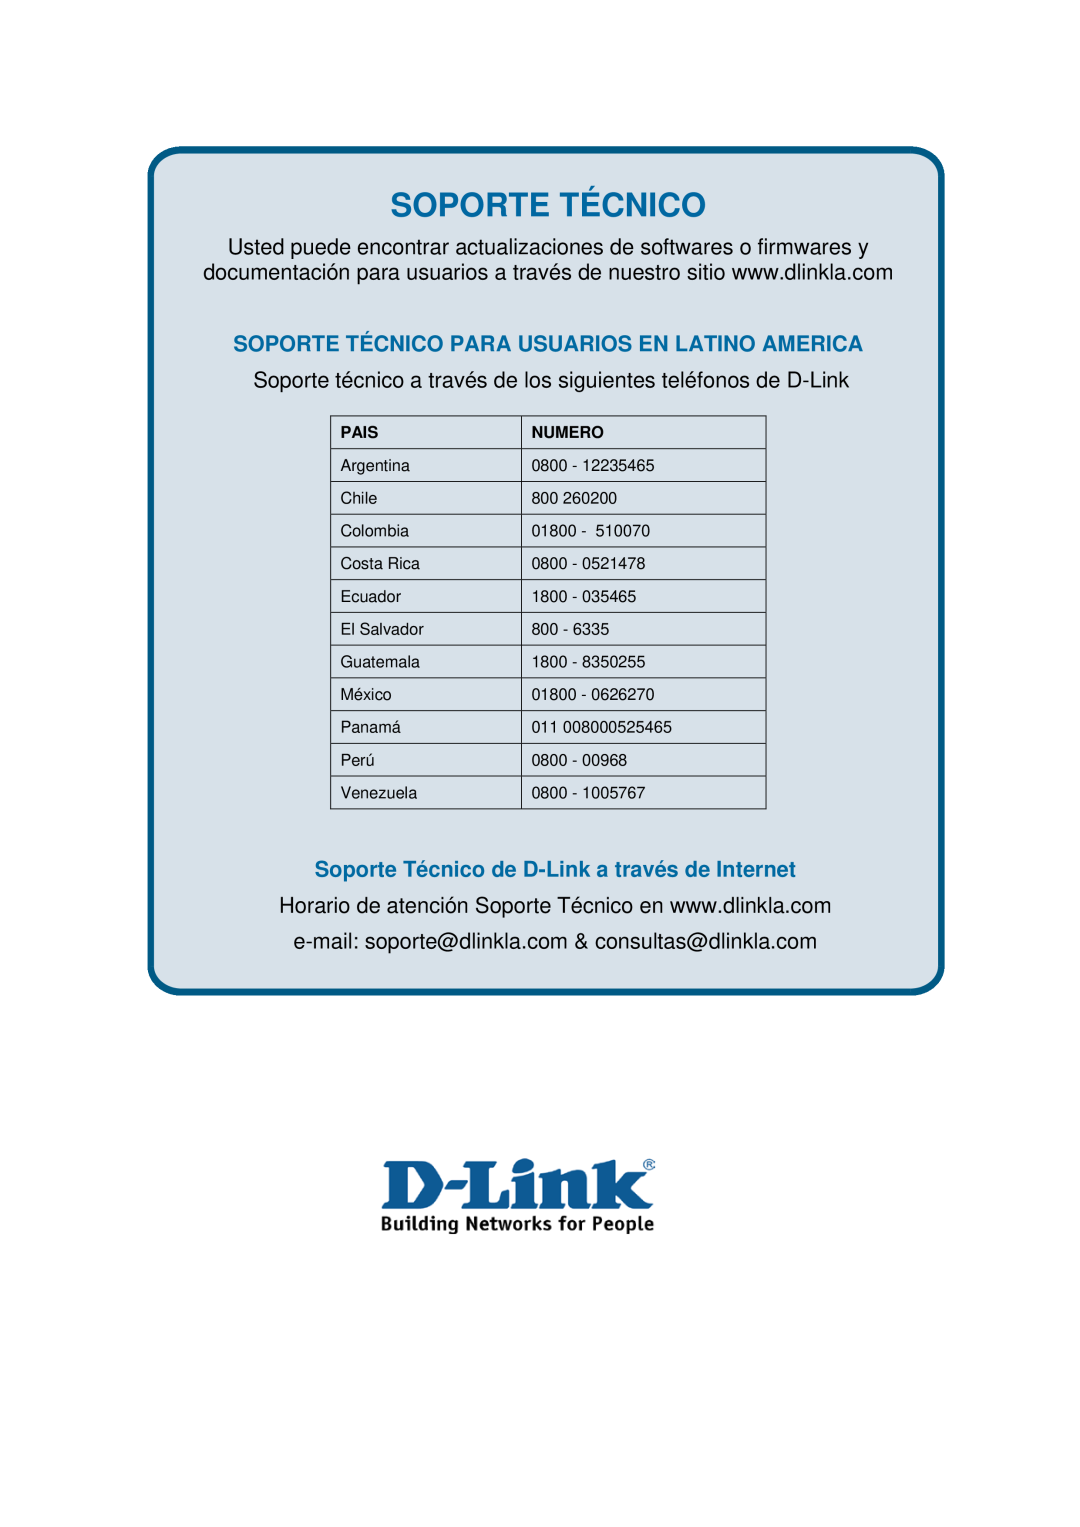 D-Link ethernet managed switch manual Soporte Técnico Para Usuarios En Latino America, Pais, Numero 